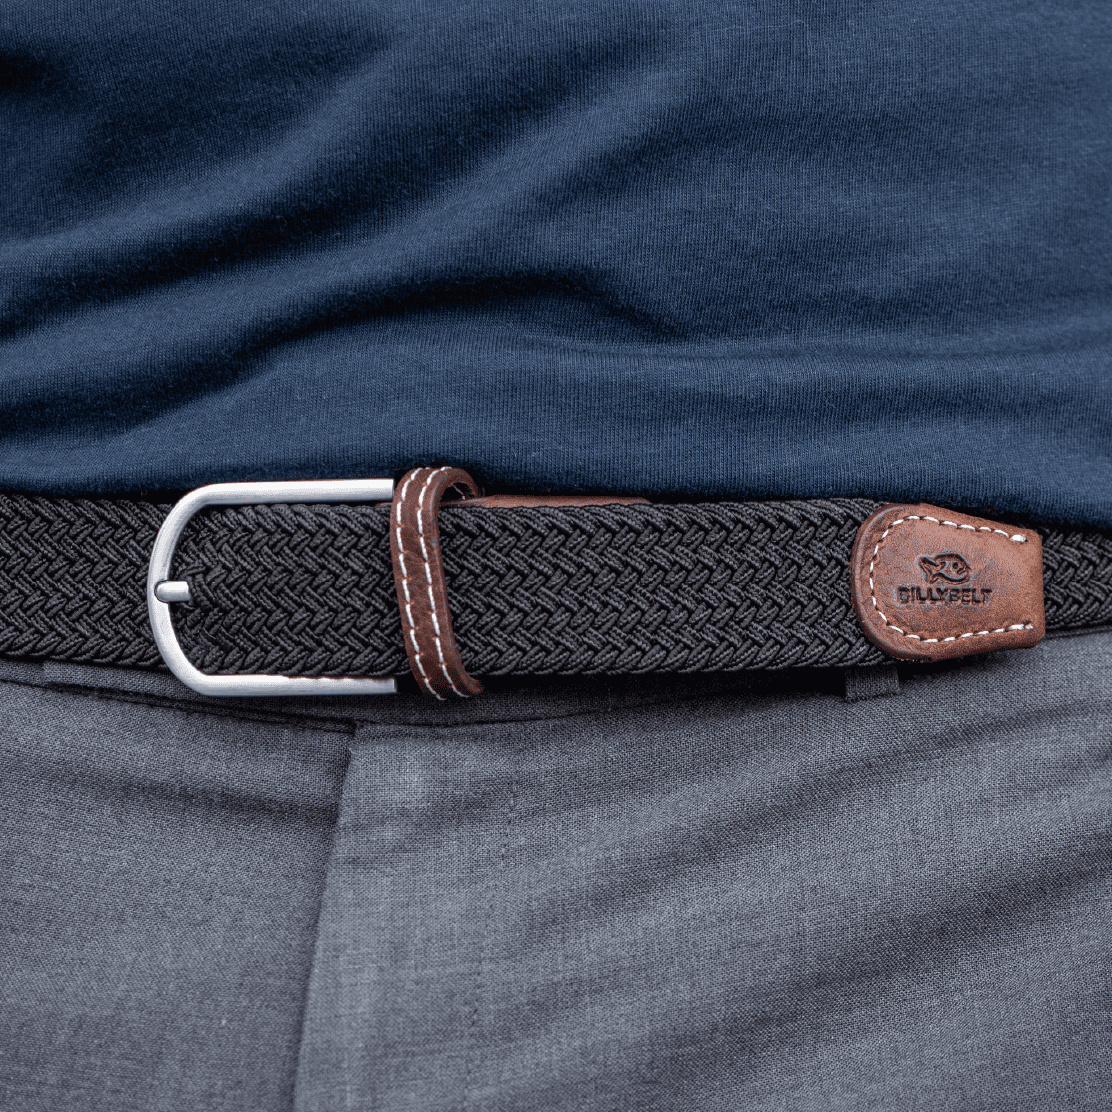 BILLYBELT - Black Licorice elastic woven belt